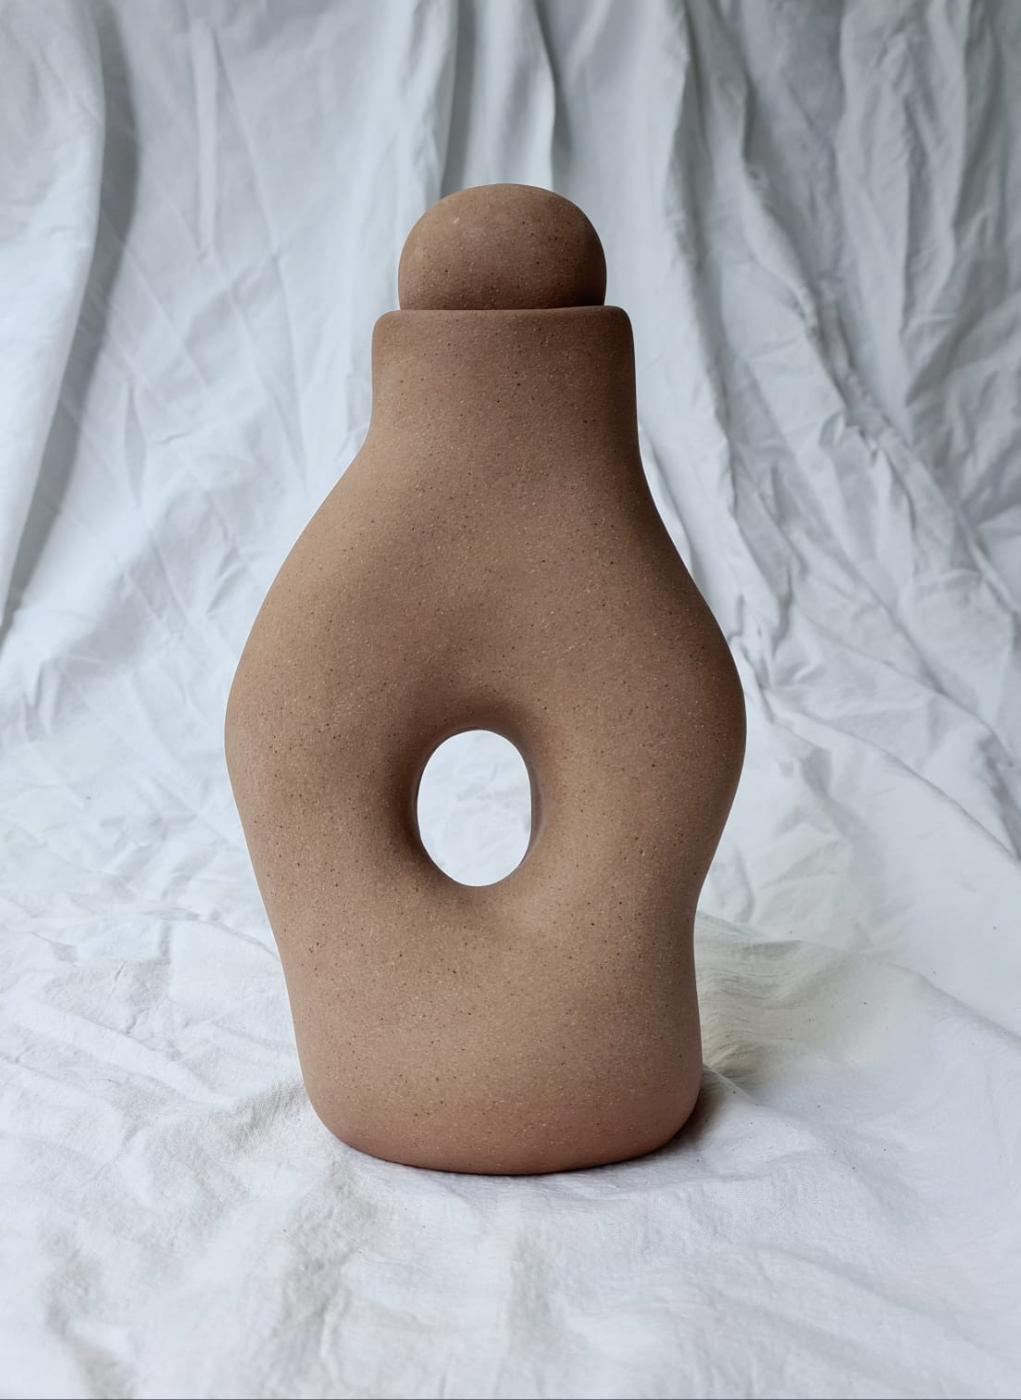 Brazilian Vase/sculpture n°5 - Hybrids series For Sale